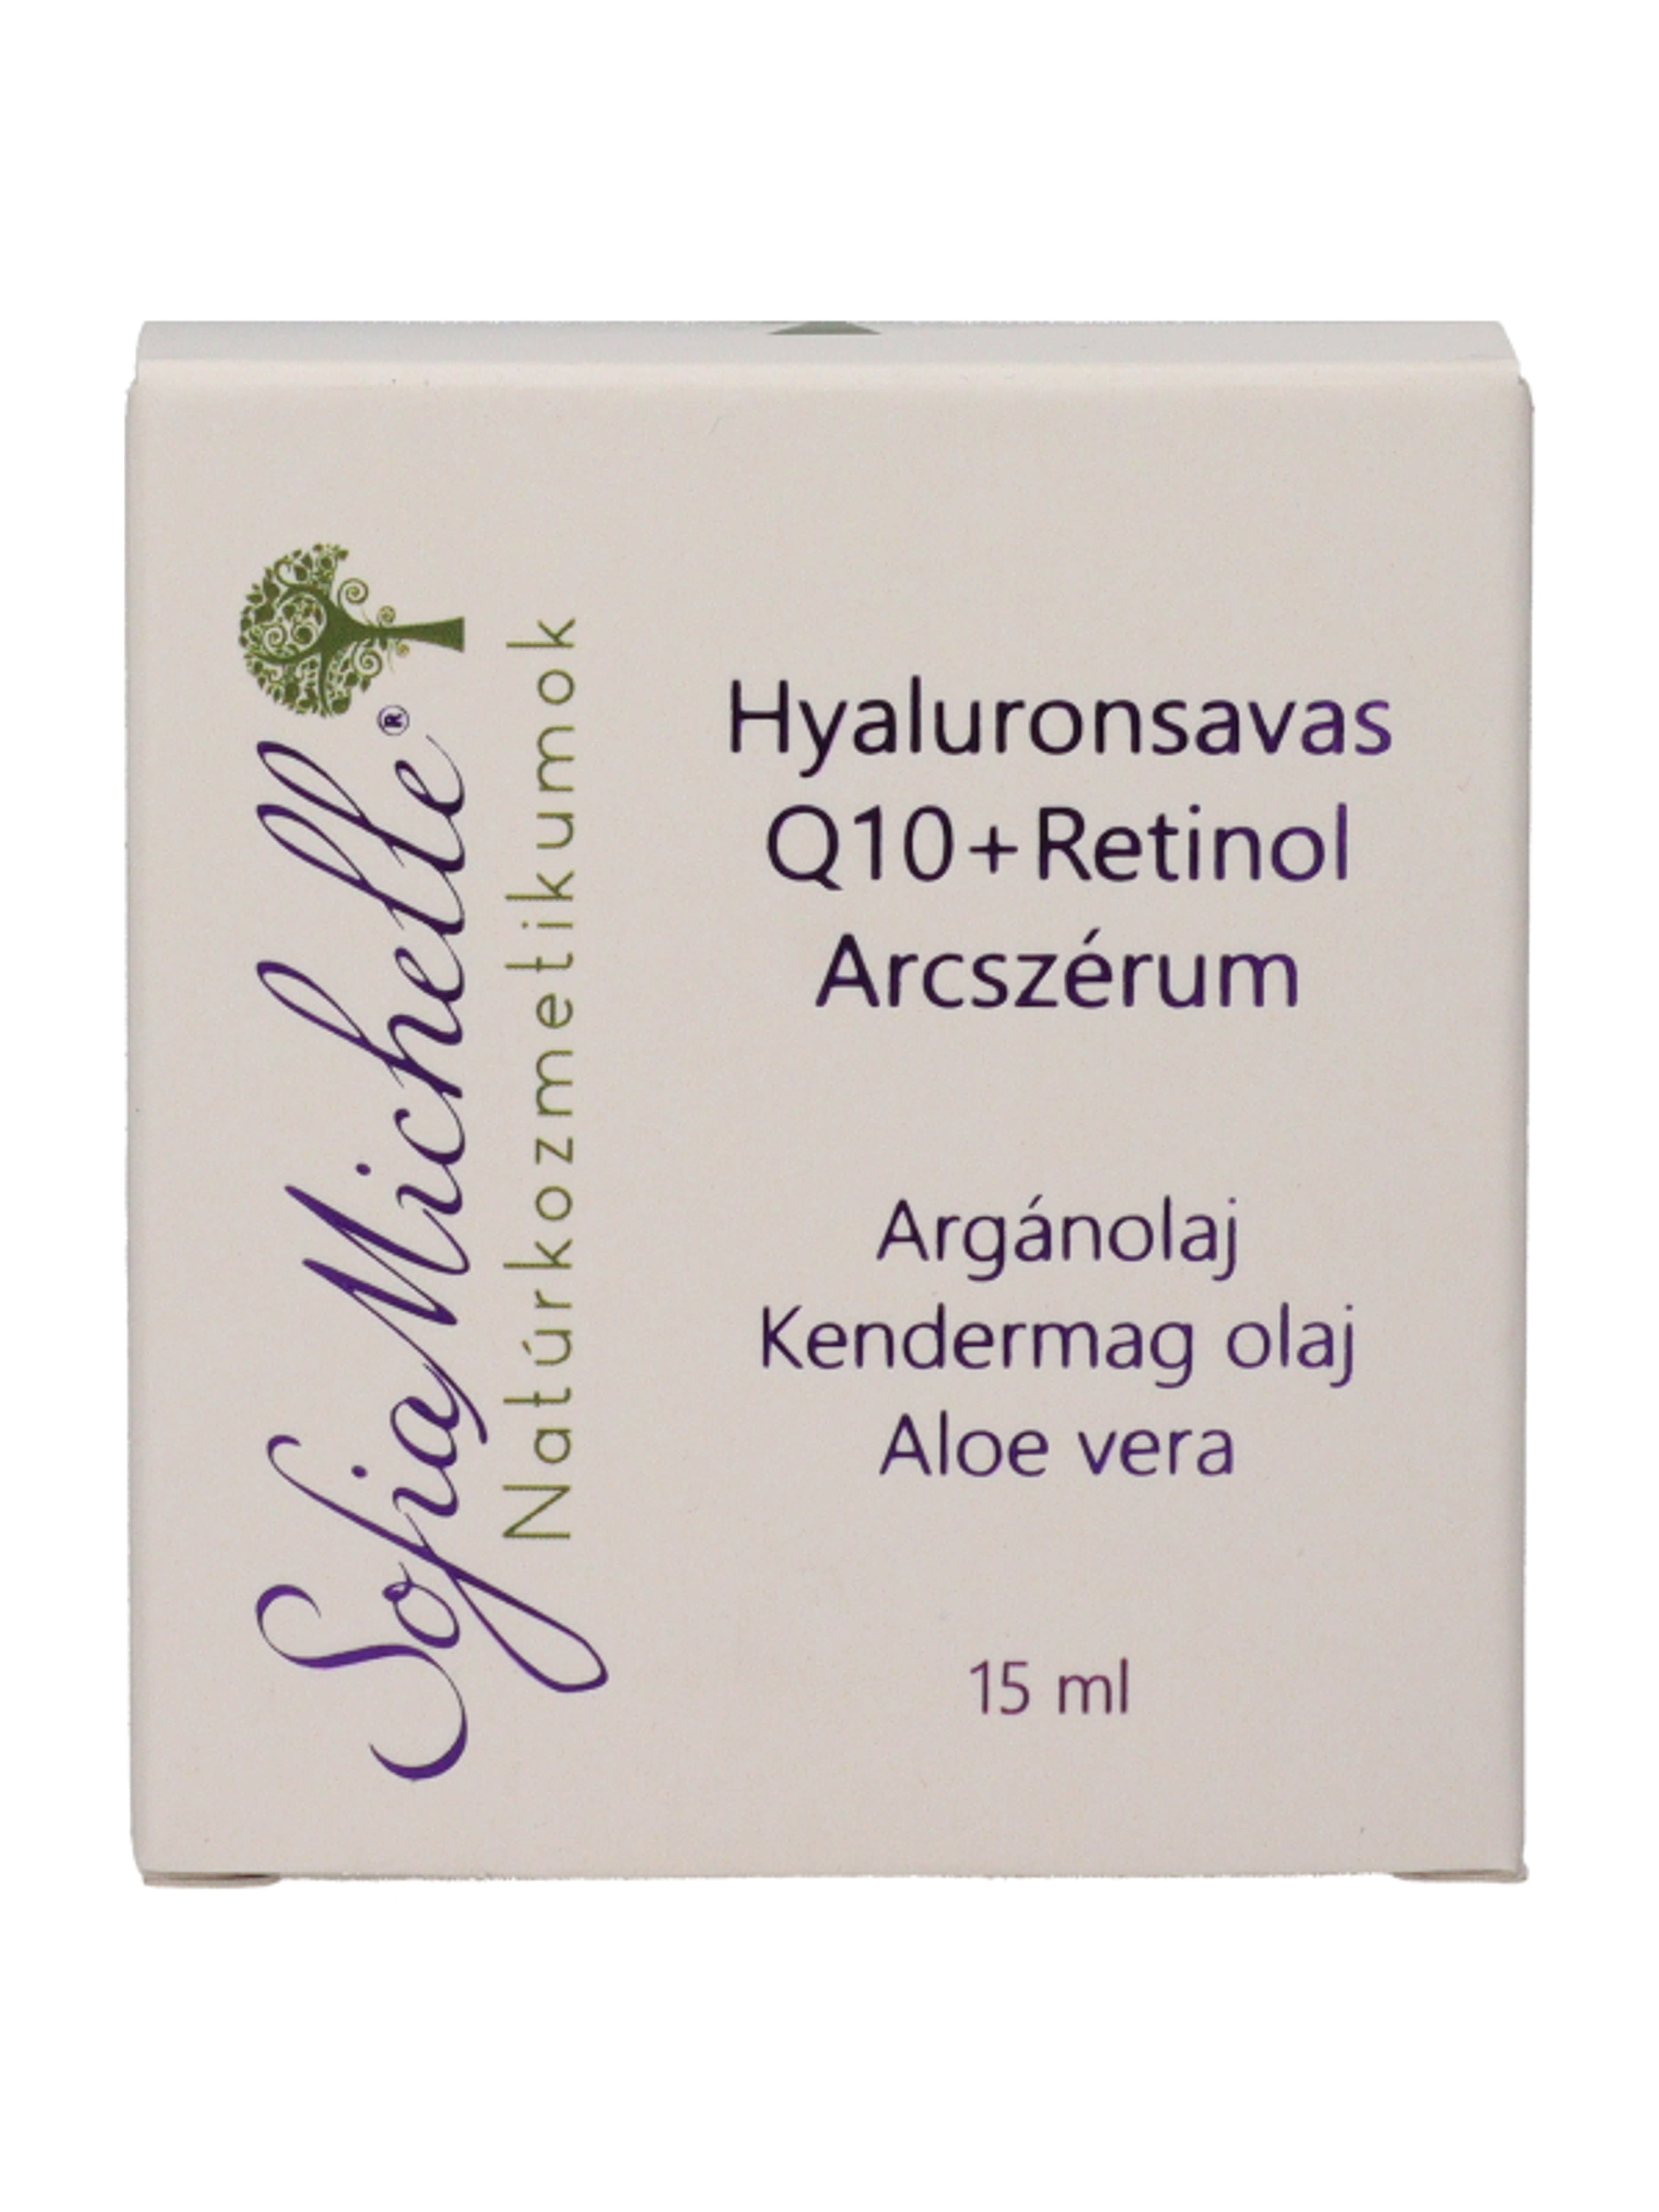 Sofia Michelle Hyaluronsavas Q10+Retinol arcszérum - 15 ml-1